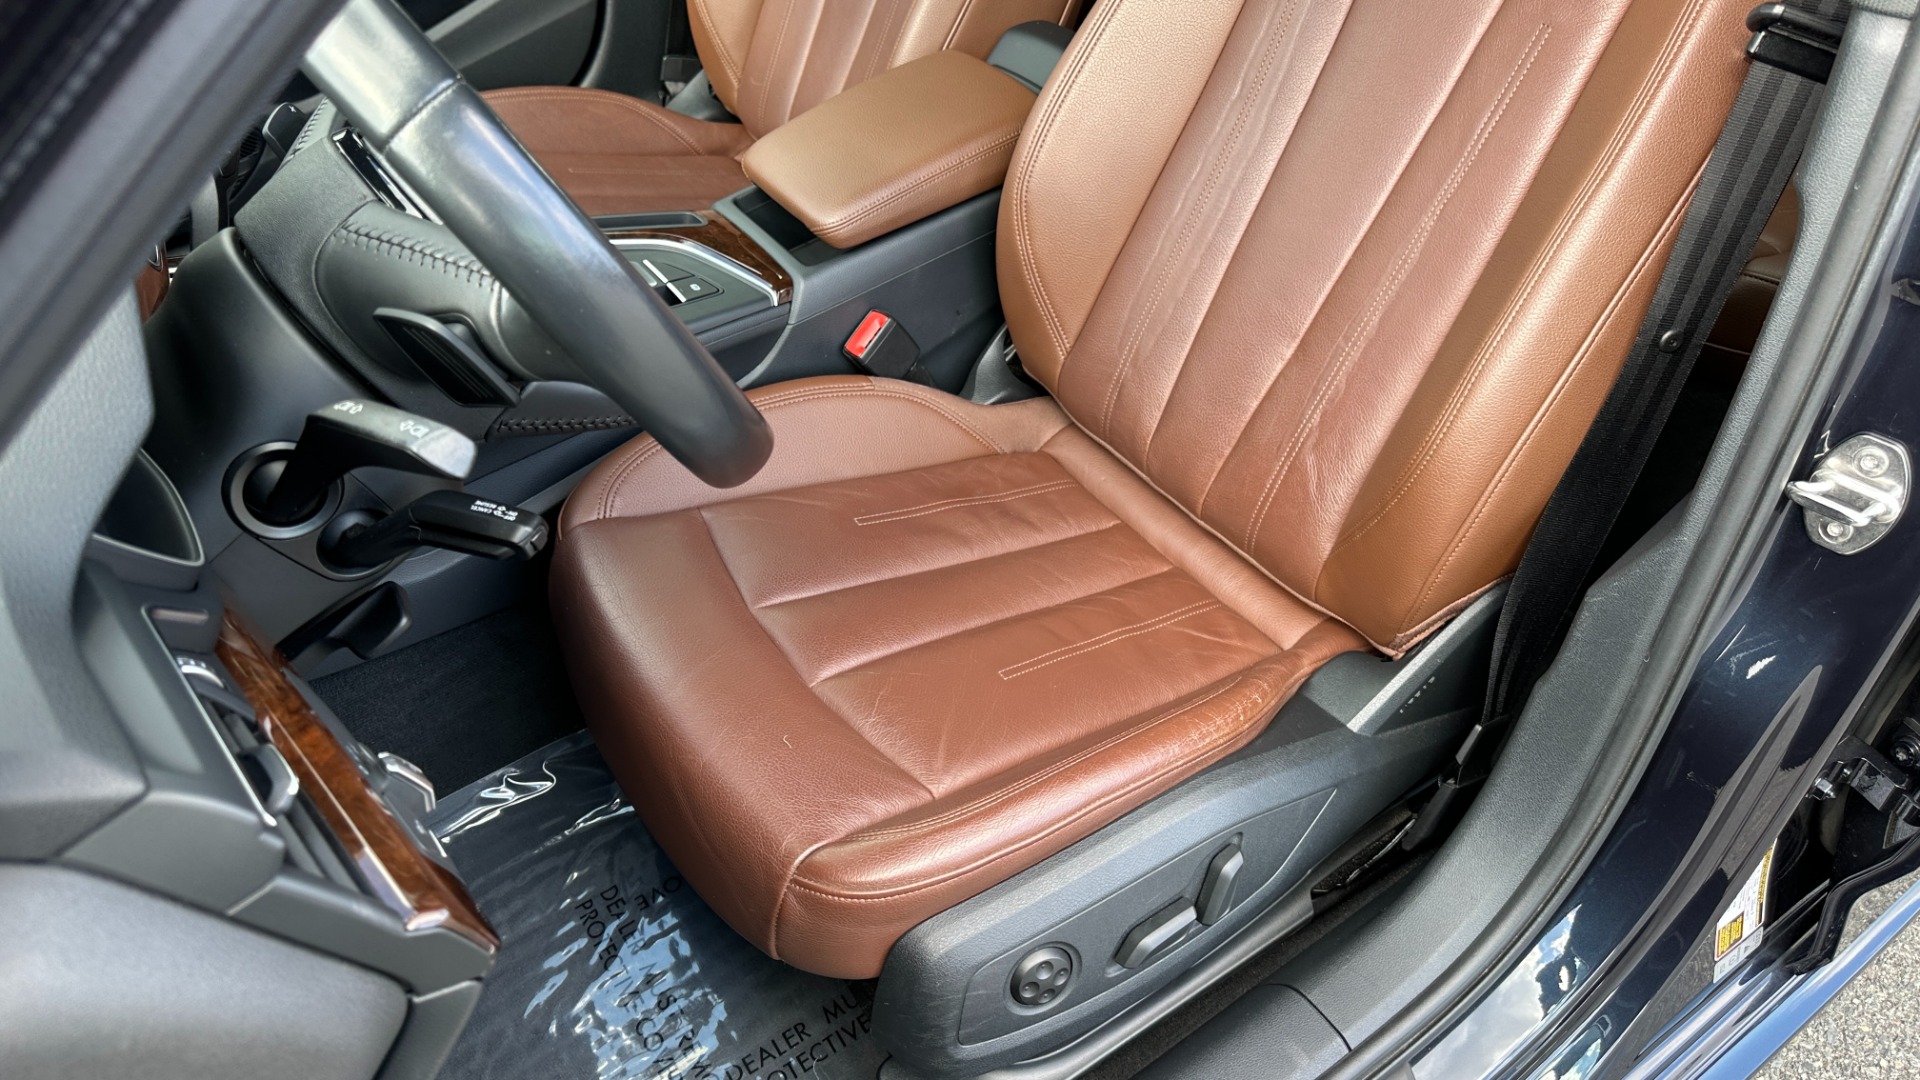 Used 2018 Audi A4 PREMIUM PLUS / PREMIUM PLUS / COLD WEATHER / WALNUT TRIM / AUDI BEAM RINGS for sale $32,995 at Formula Imports in Charlotte NC 28227 14